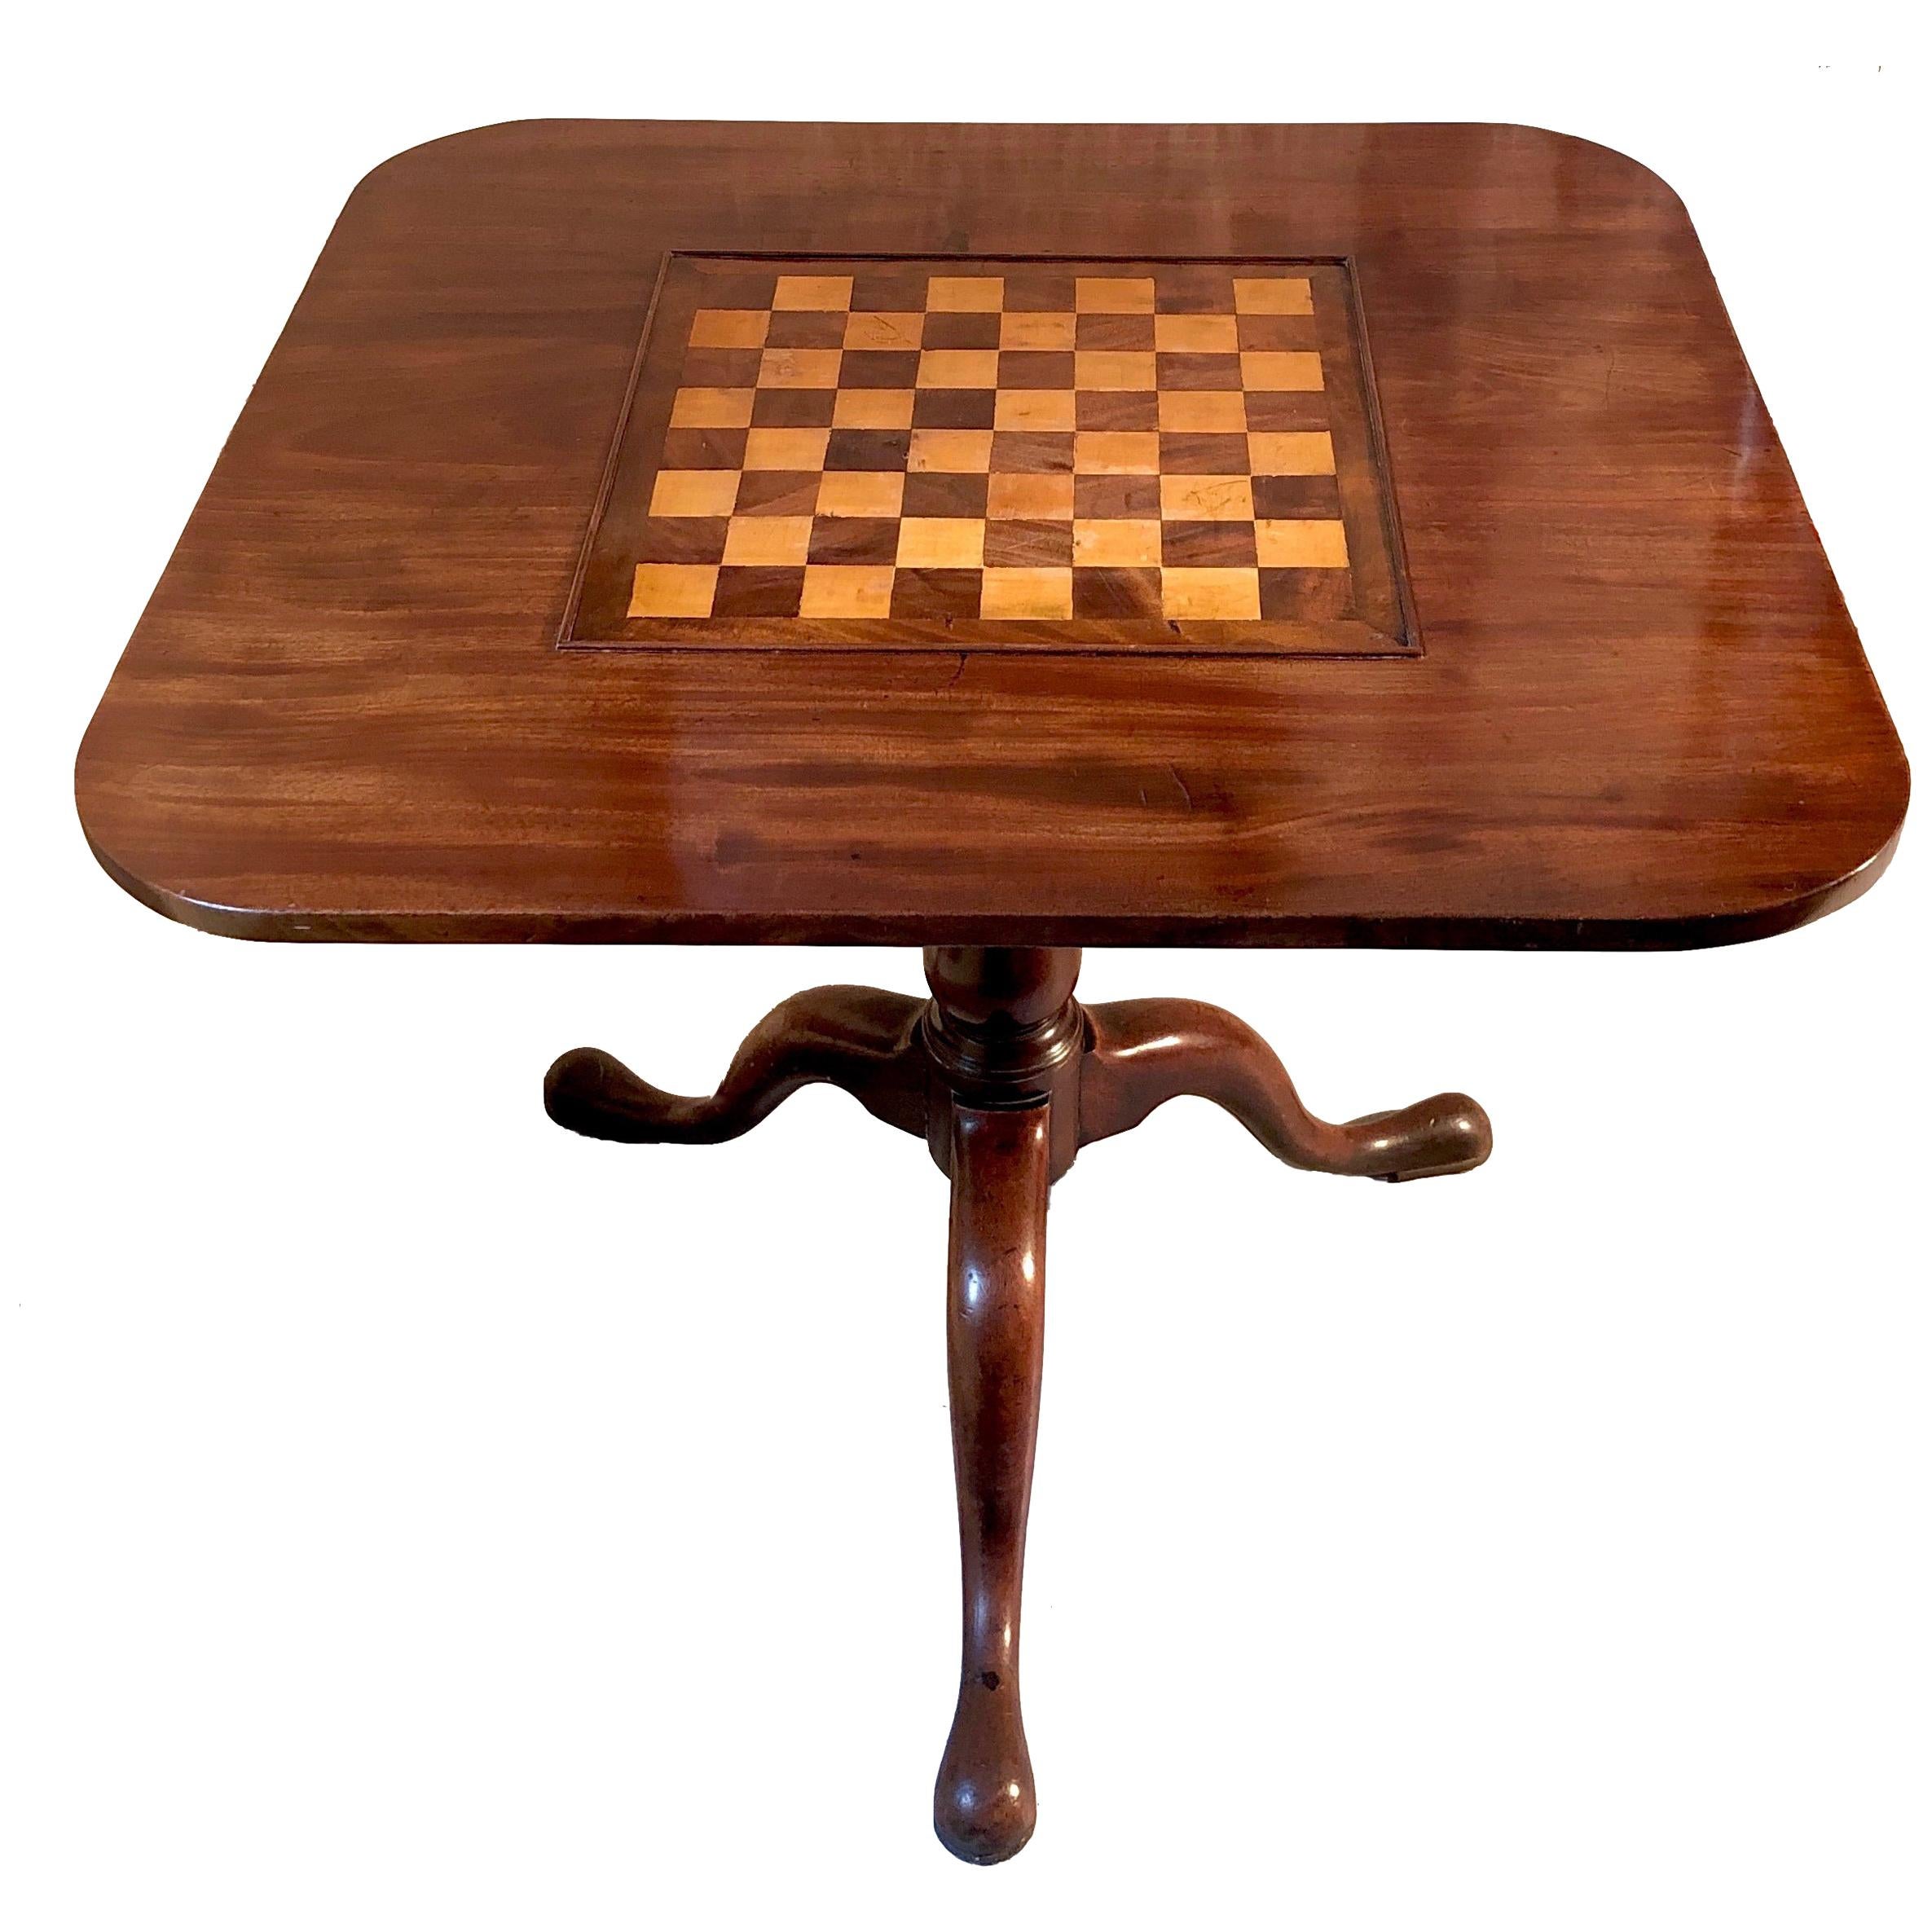 Table de jeu antique Chesssboard Birdcage Mahogany Satinwood Tripod England